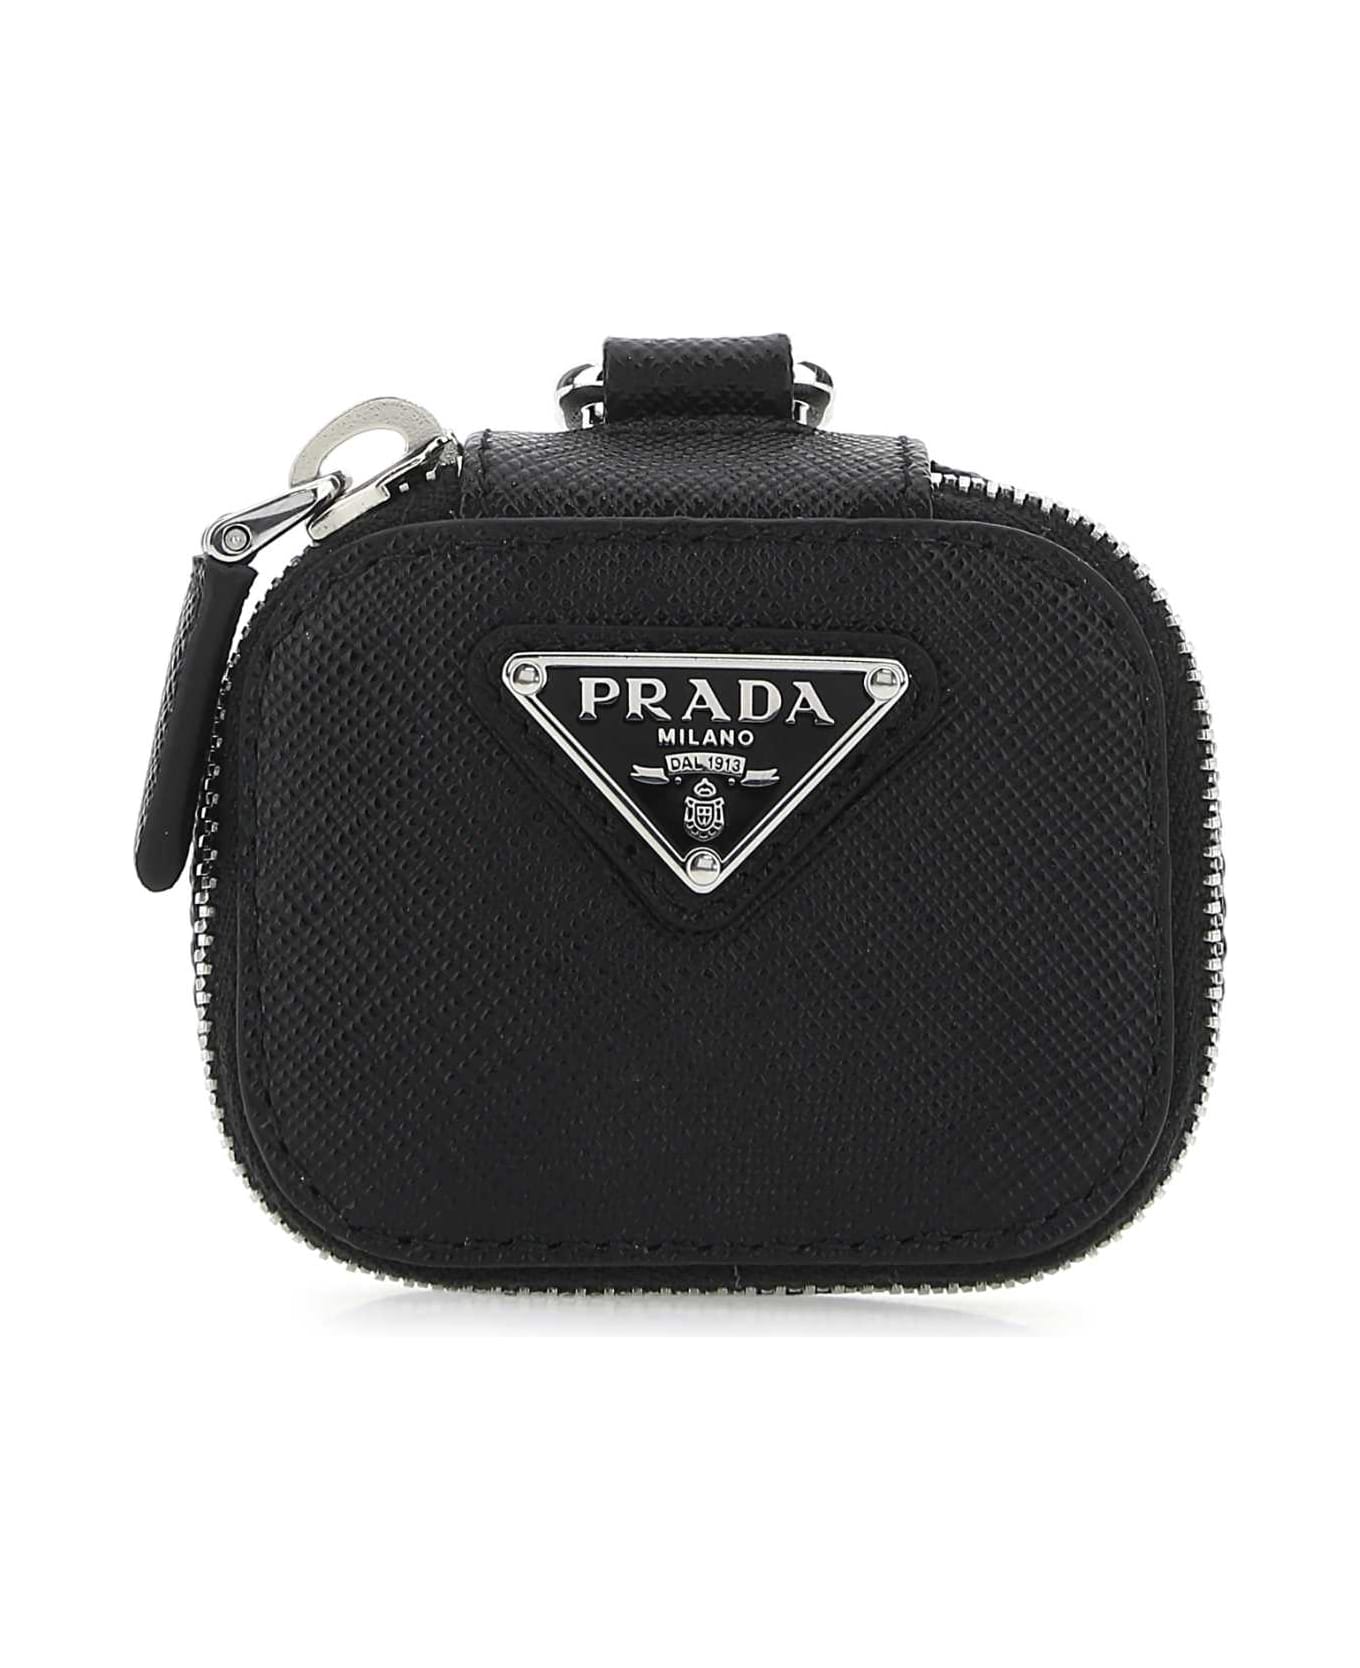 Prada Black Leather Air Pods Case - F0002